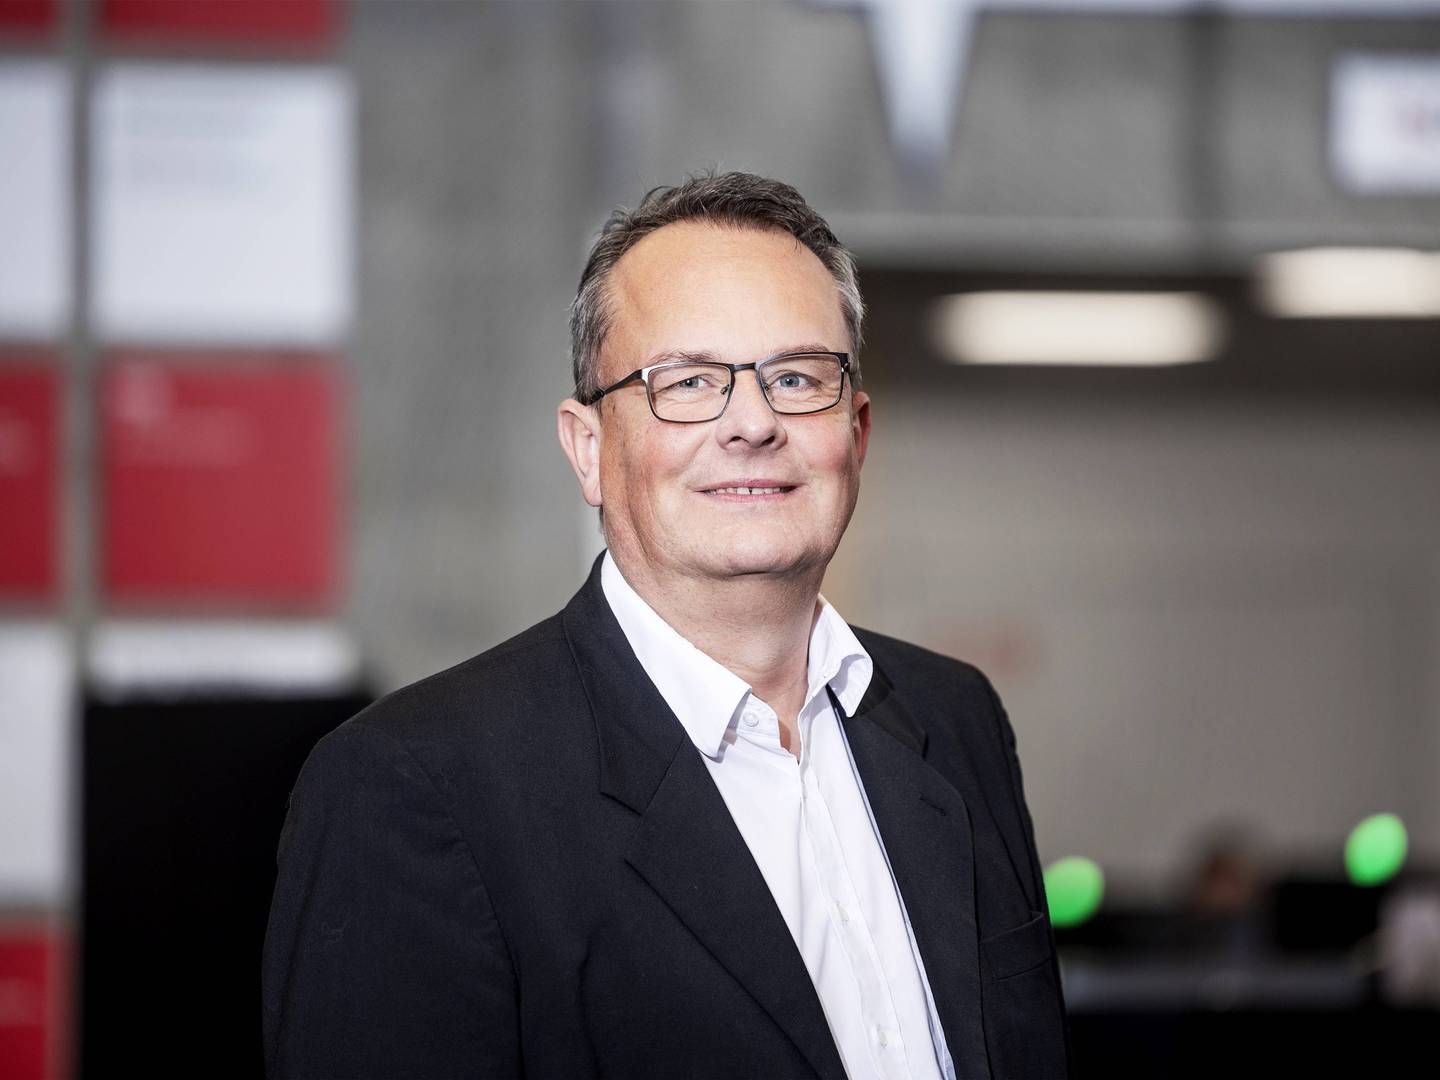 E-Komplets adm. direktør Karsten Mandrup Nielsen har talt med mange interesserede kapitalfonde og investorer. | Foto: PR